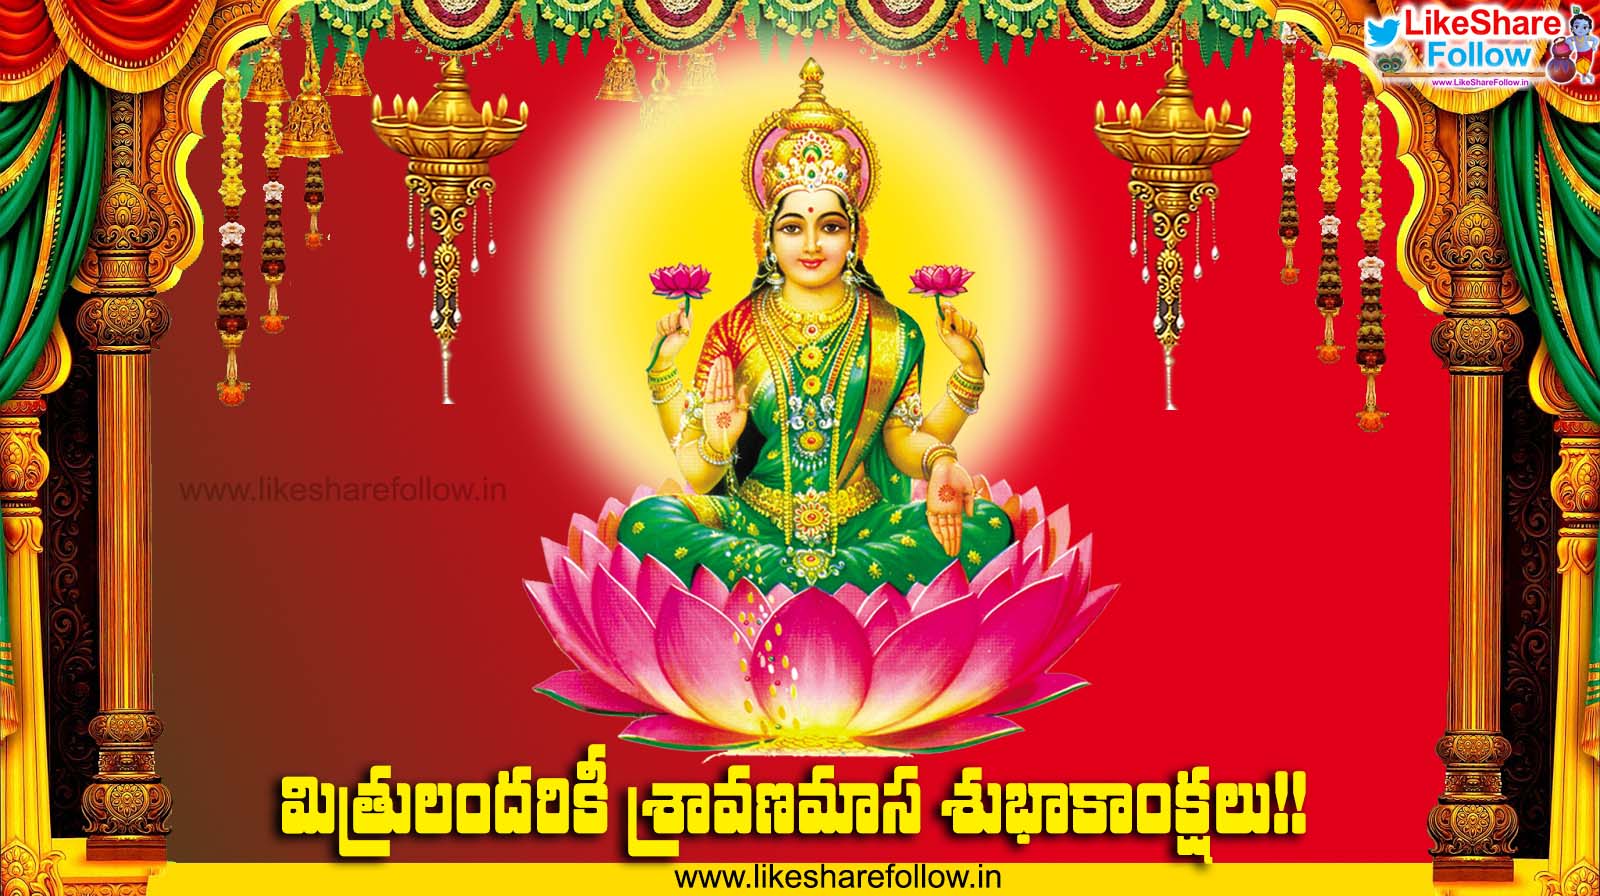 Sravana masam shubhakankshalu wishes images greetings telugulo ...